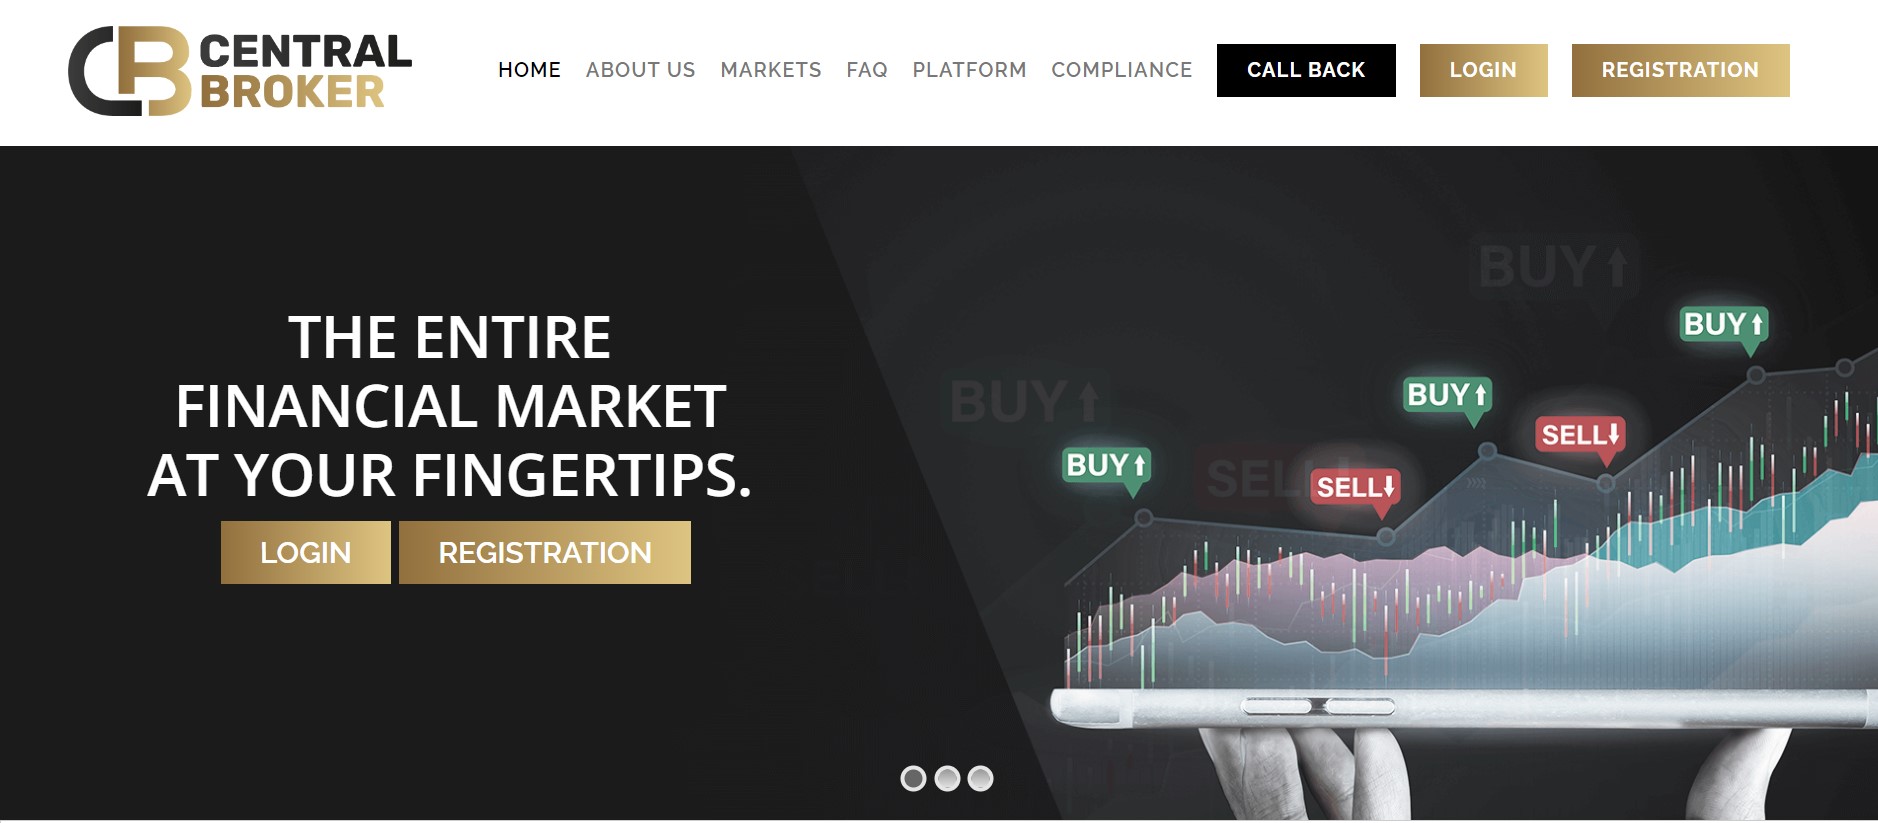 Central Broker website